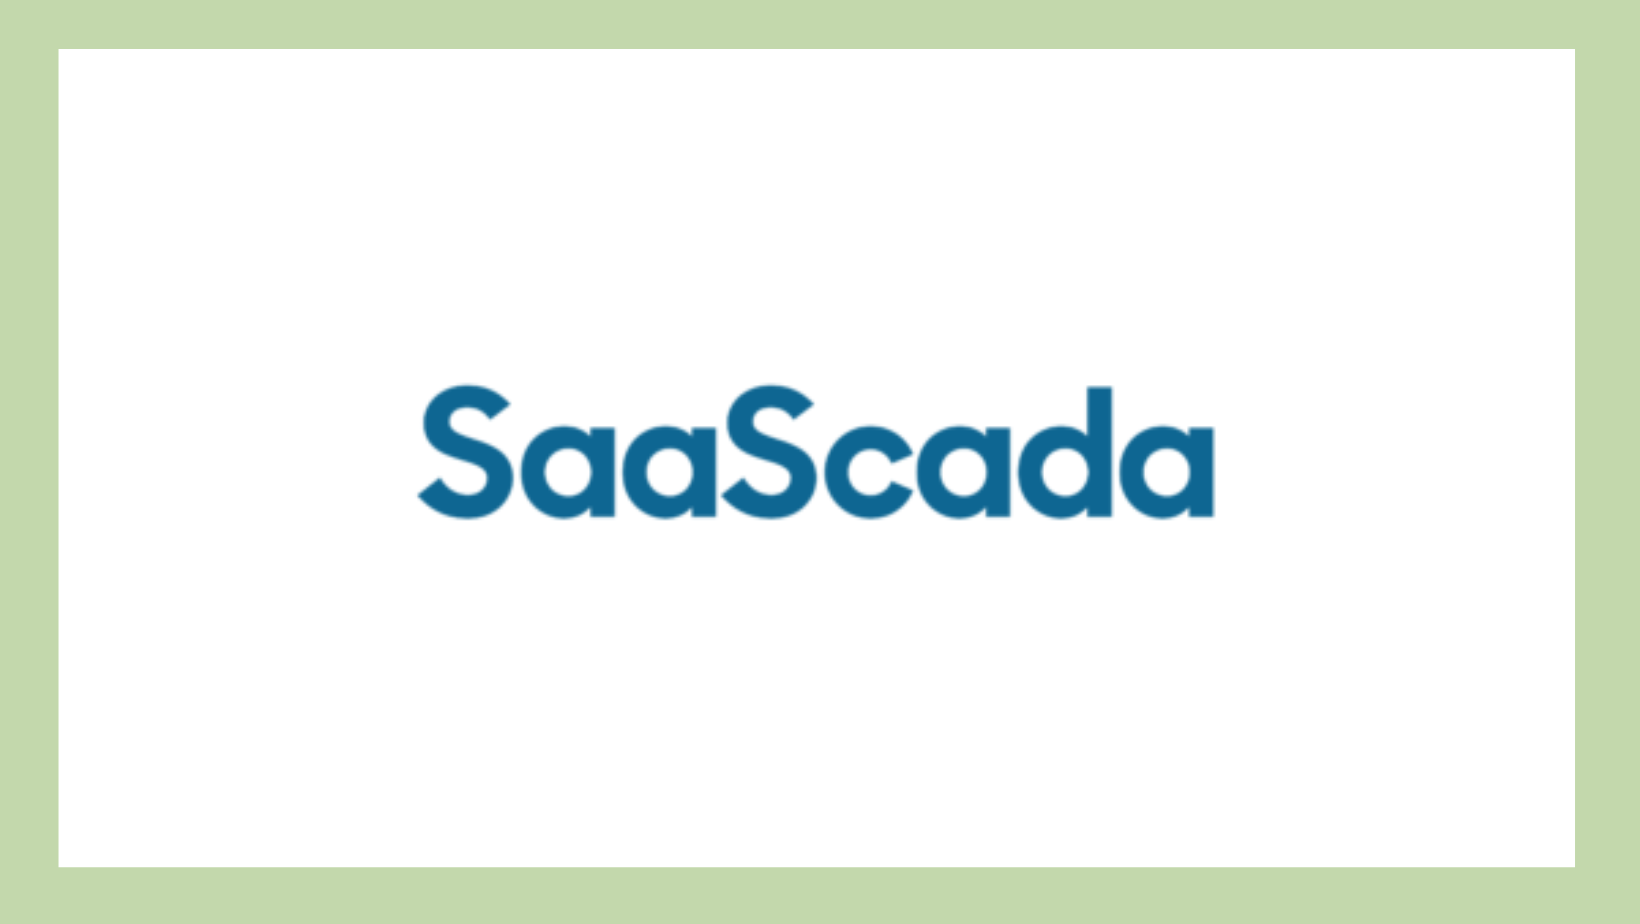 SaaScada Testimonial – Hiring Software Engineers